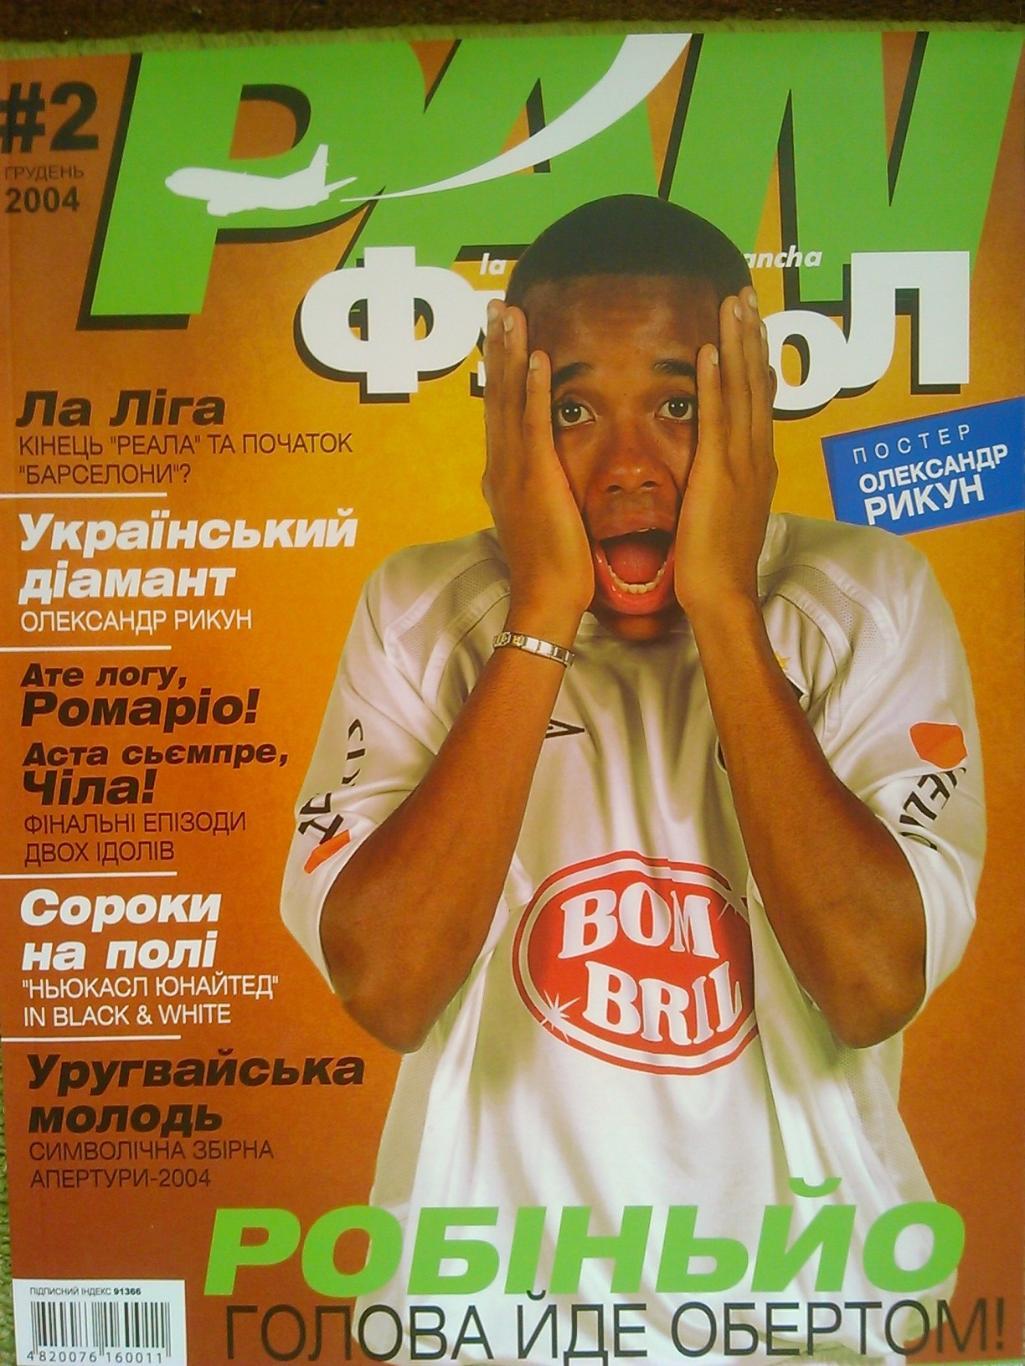 PAN ФУТБОЛ №2 грудень 2004. Постер-О.Рикун. Оптом скидки до 49%!